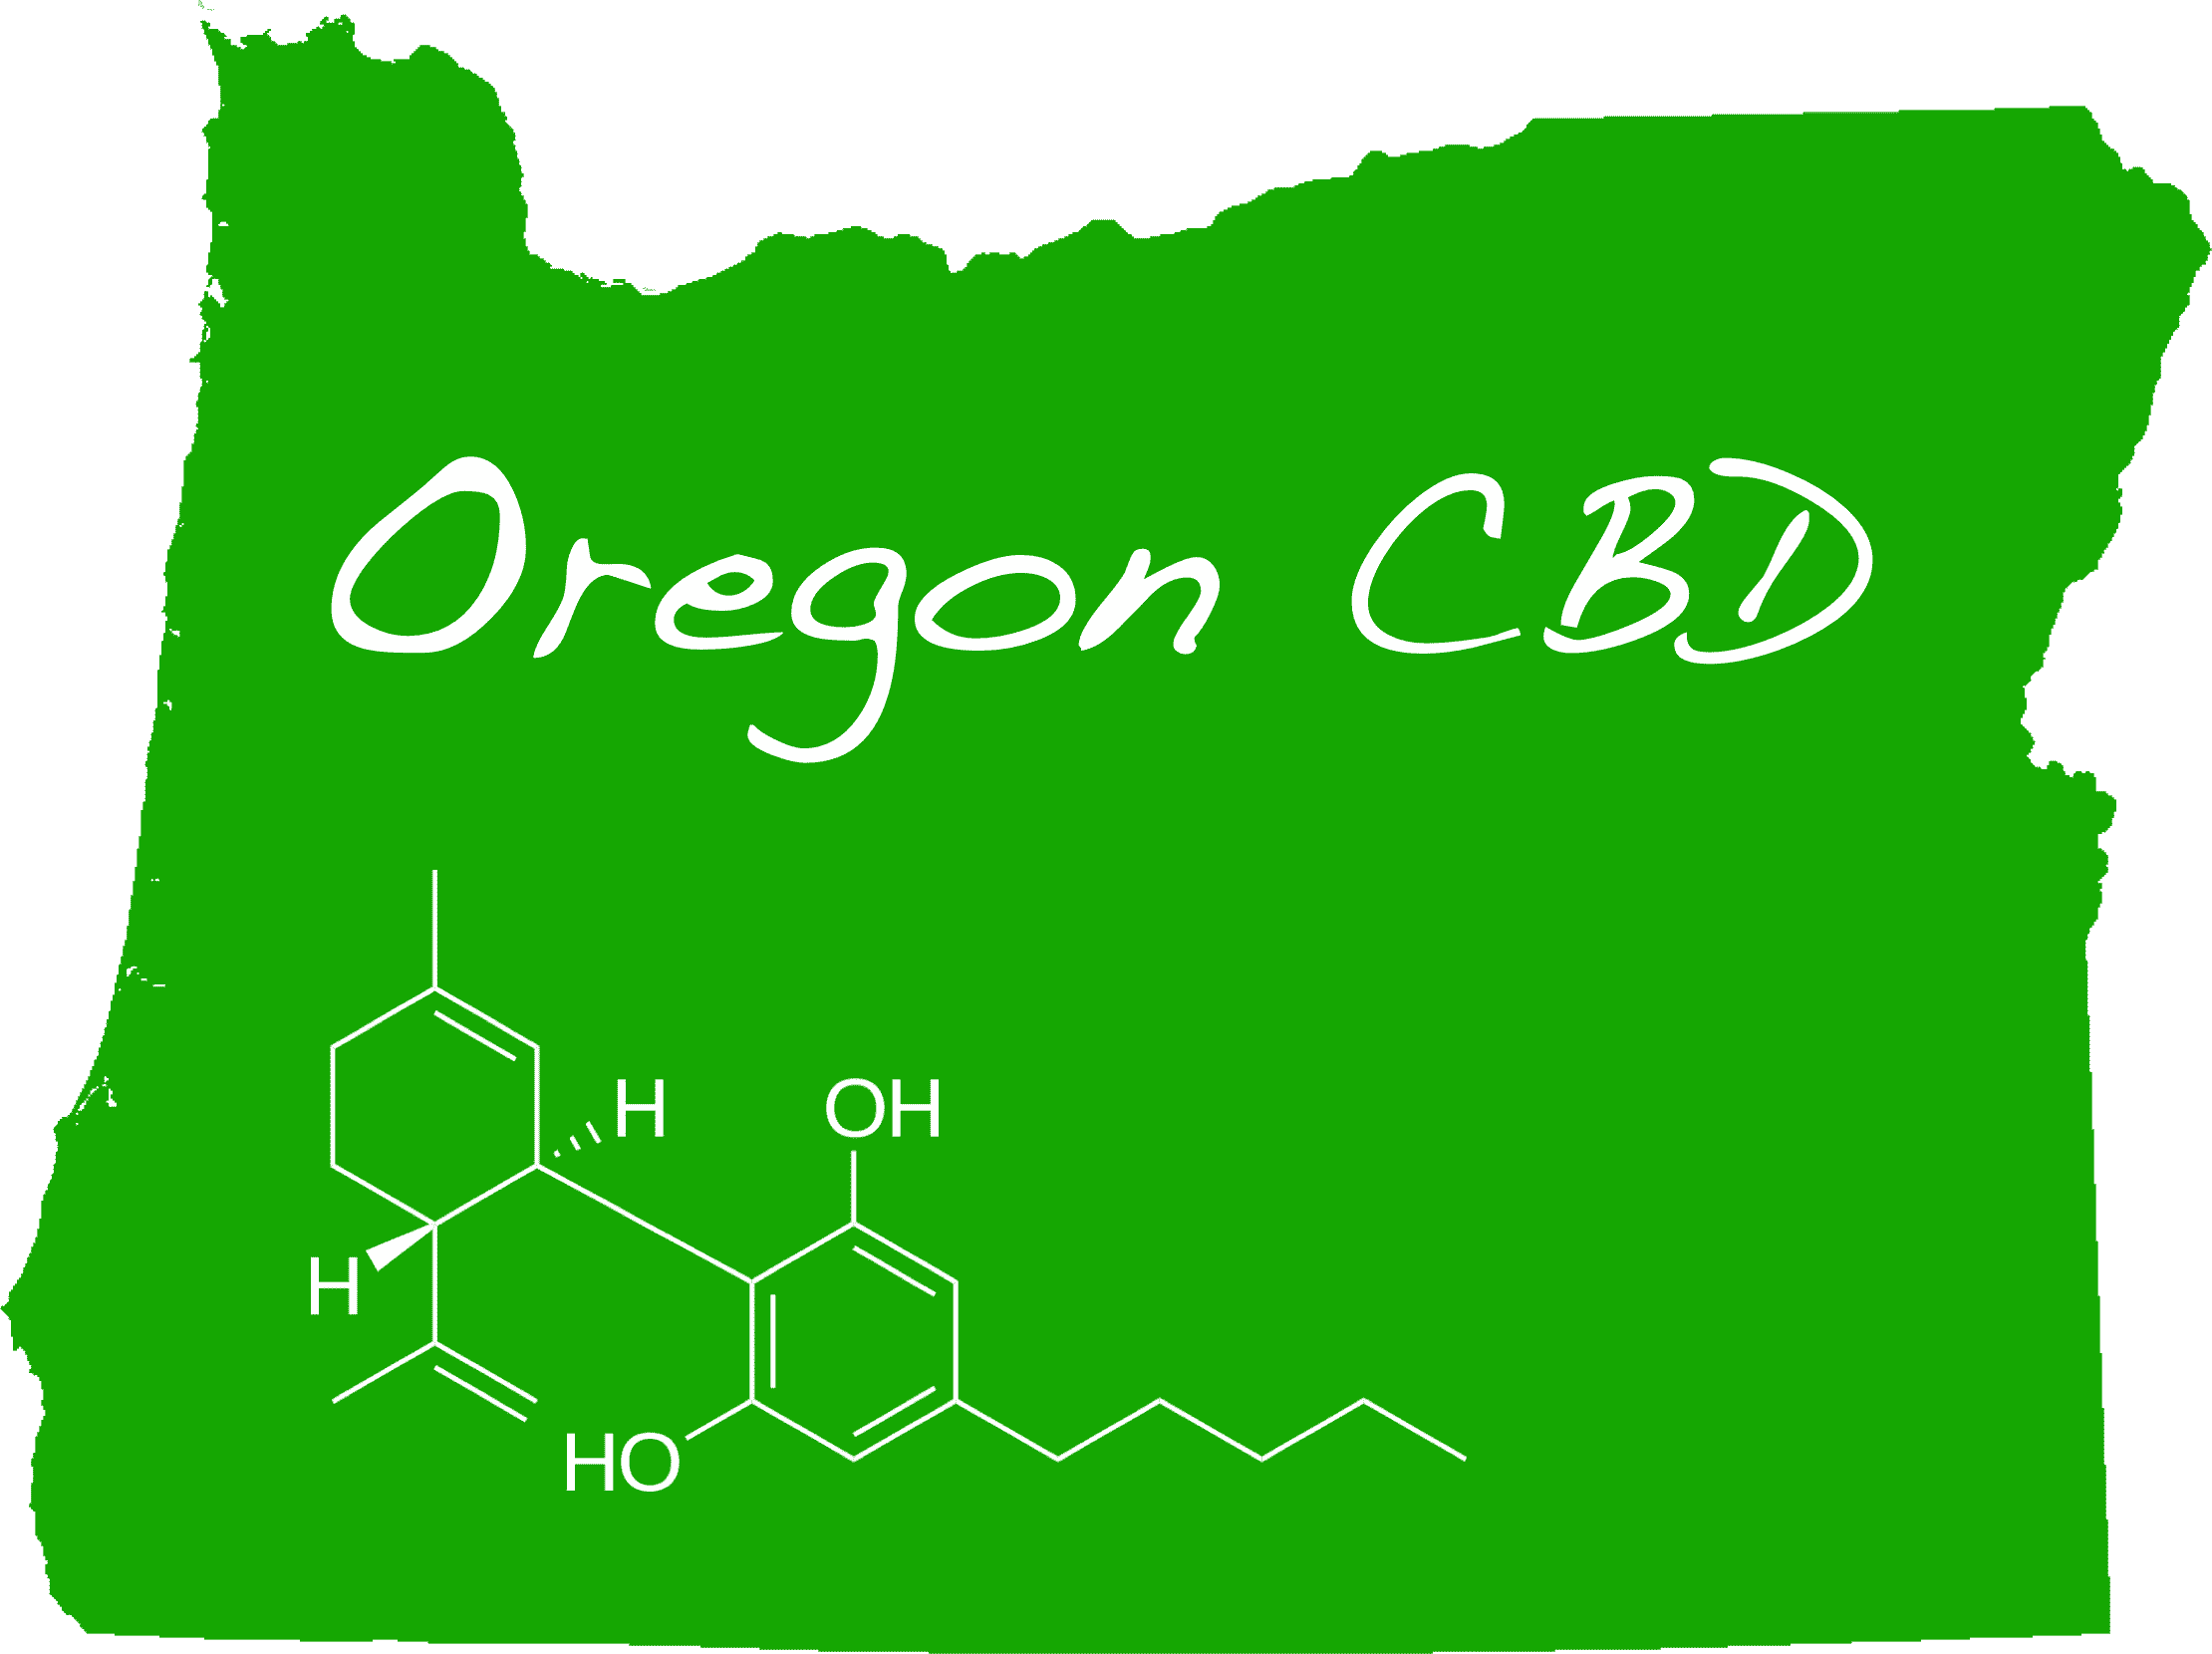 Oregon CBD Seeds